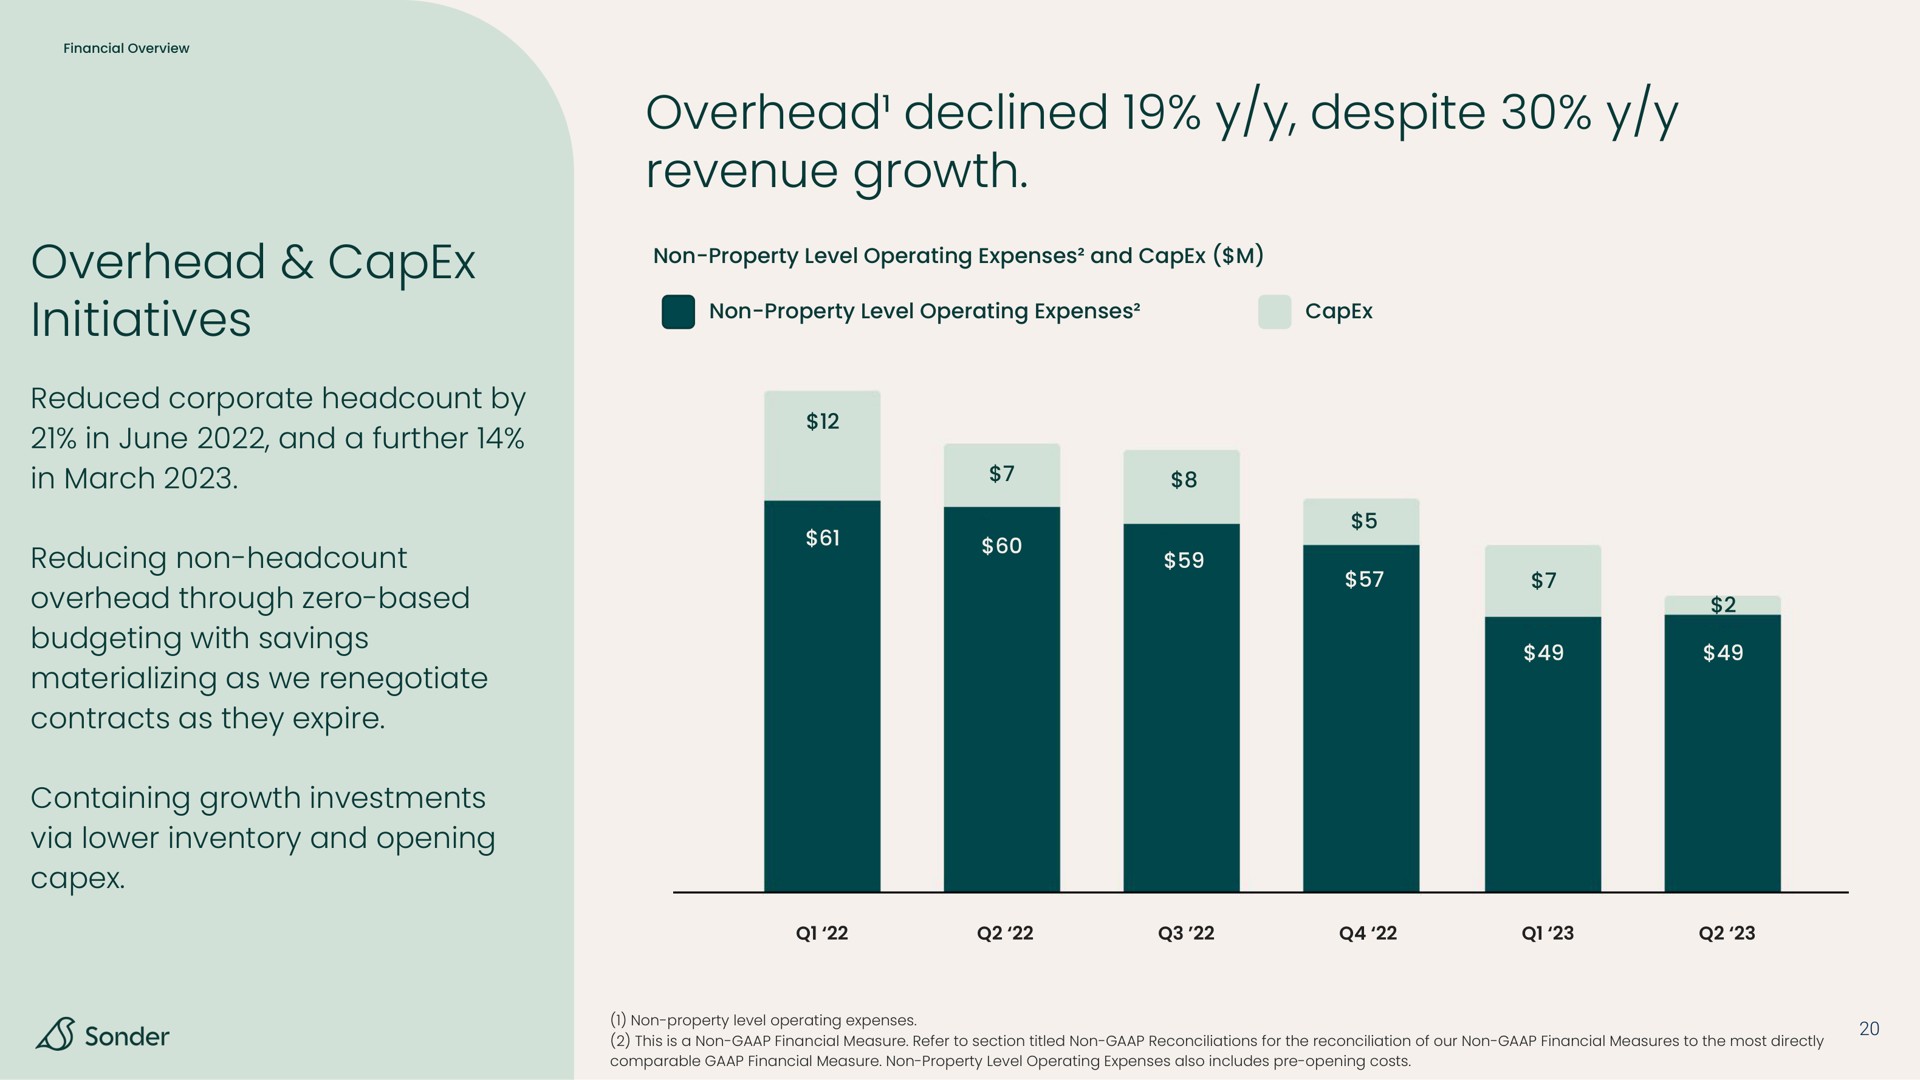 overhead initiatives overhead declined despite revenue growth | Sonder